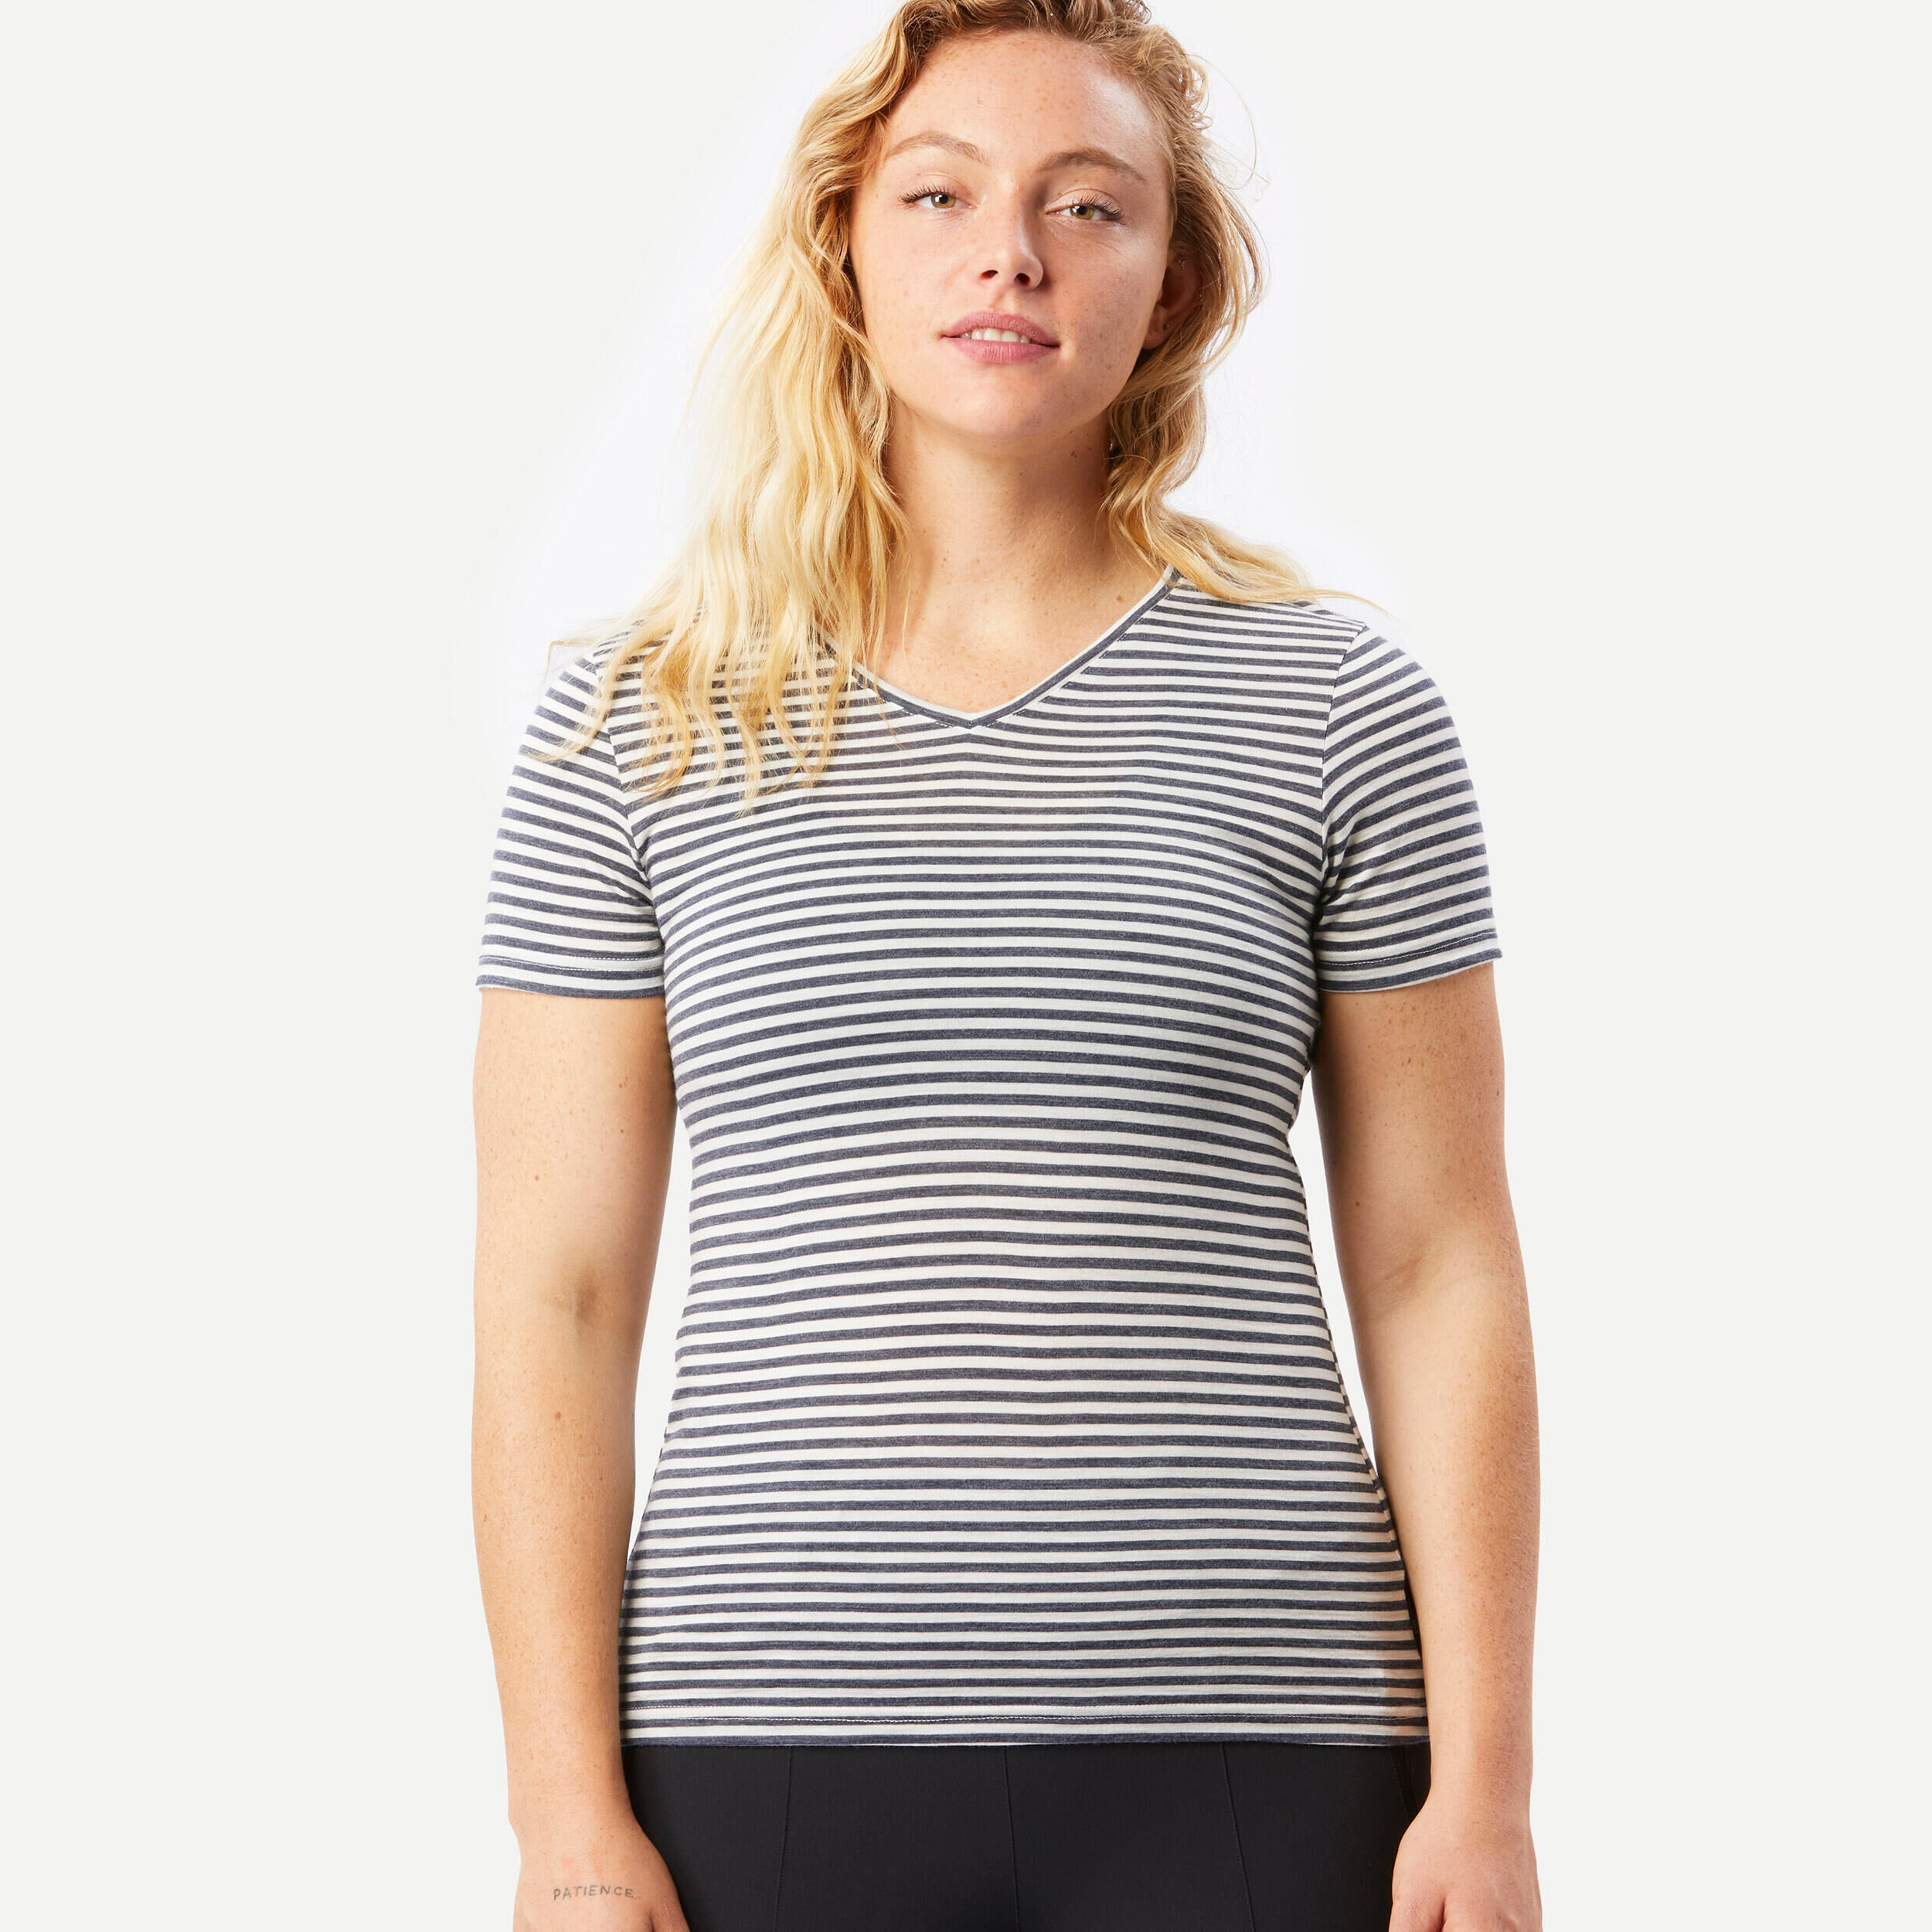 FORCLAZ Women's Travel Trekking Merino Wool Short-Sleeved T-Shirt - TRAVEL 500